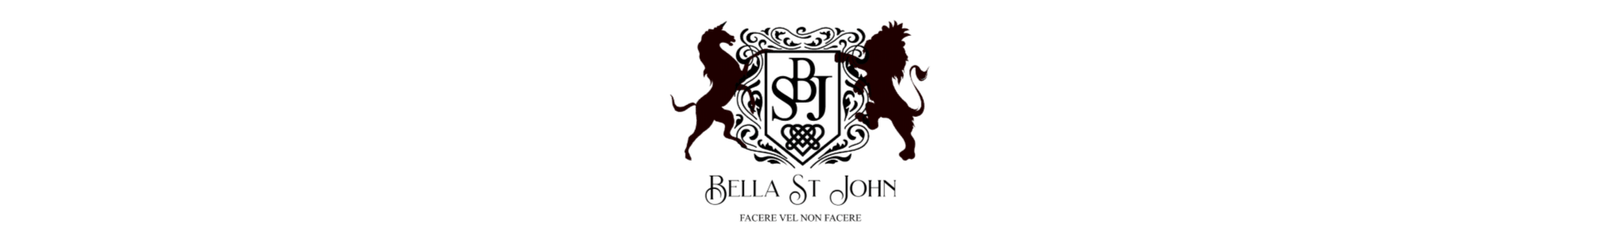 Bella St John